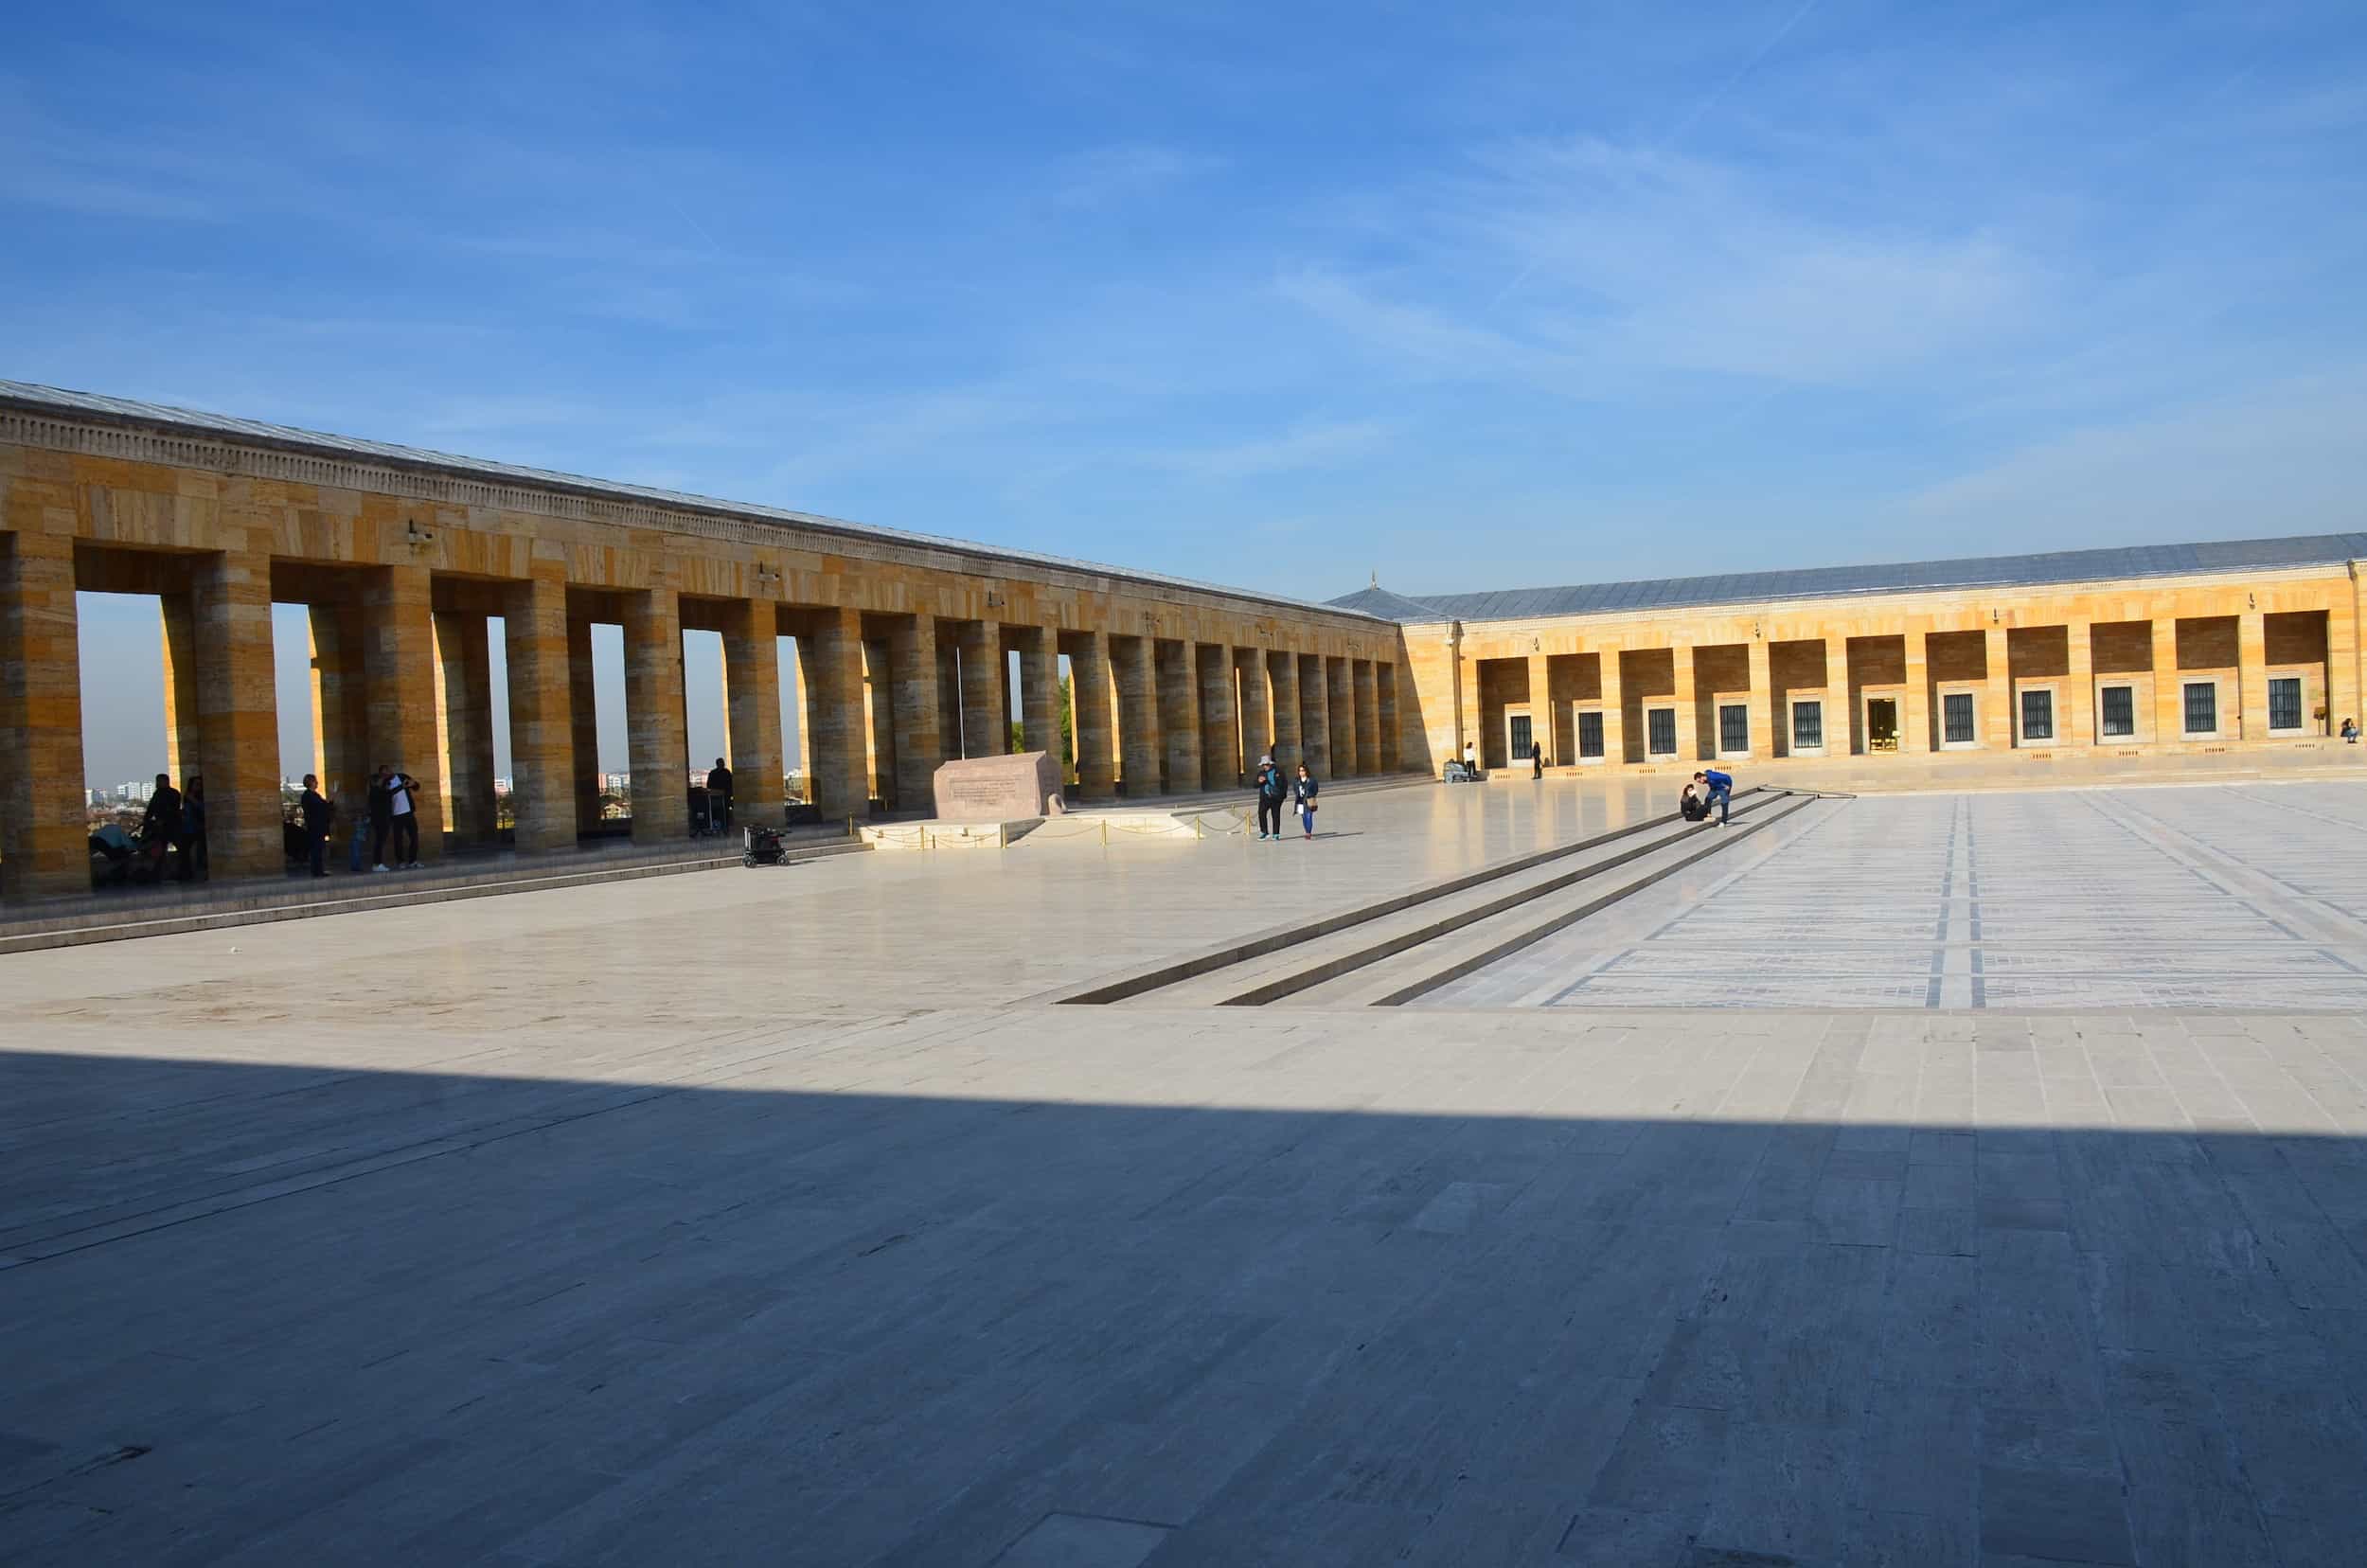 West side of the Ceremonial Plaza at Anıtkabir in Ankara, Turkey